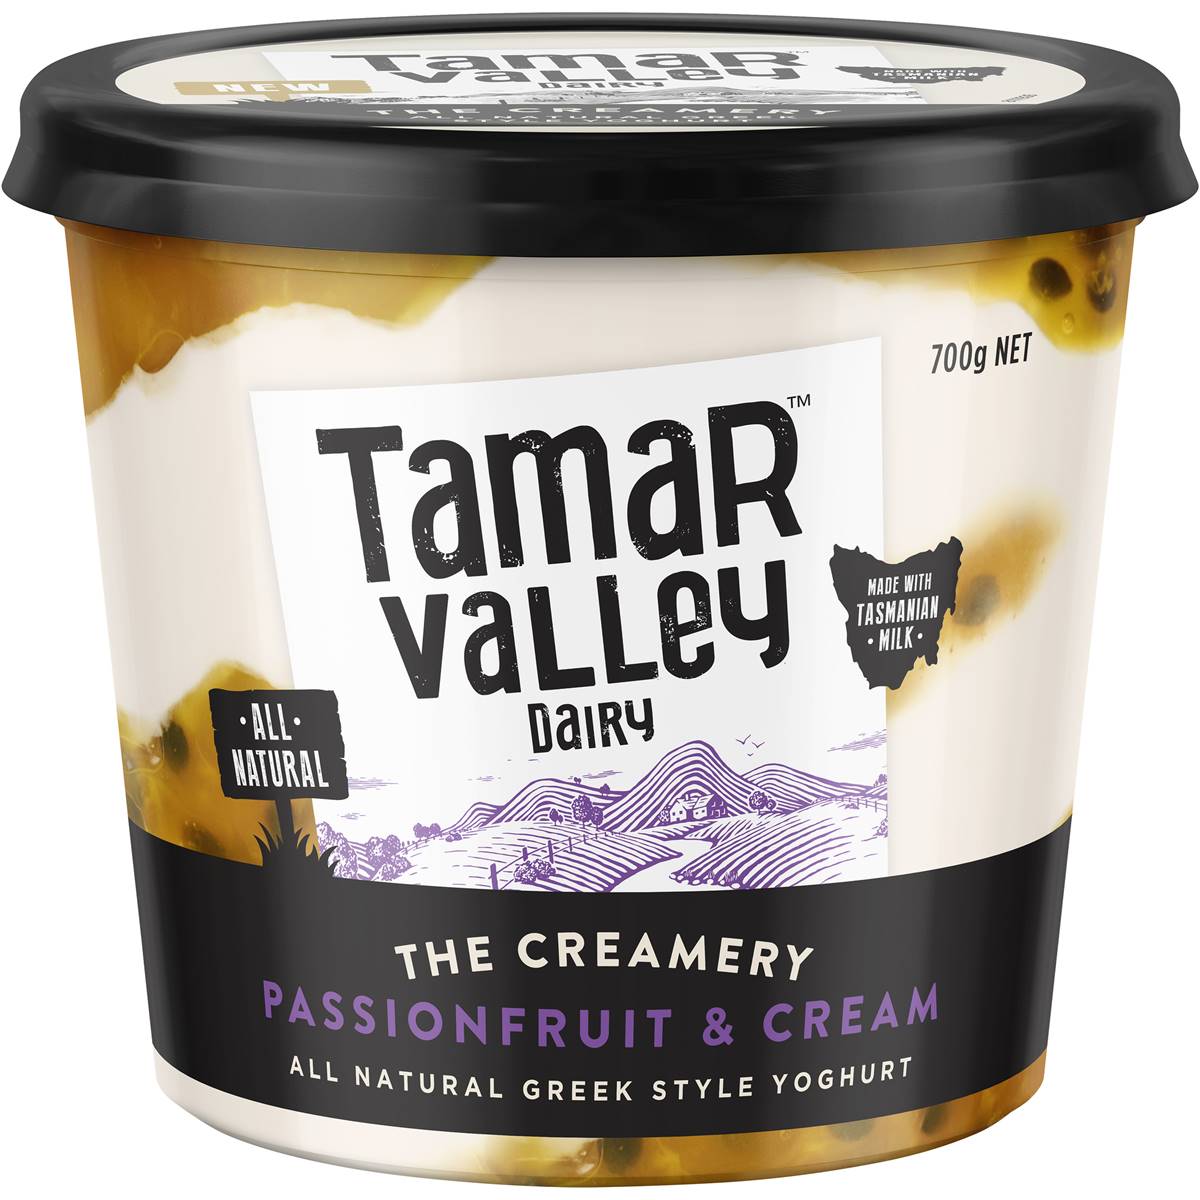 Calories in Tamar Valley Dairy Yoghurt Passionfruit & Cream